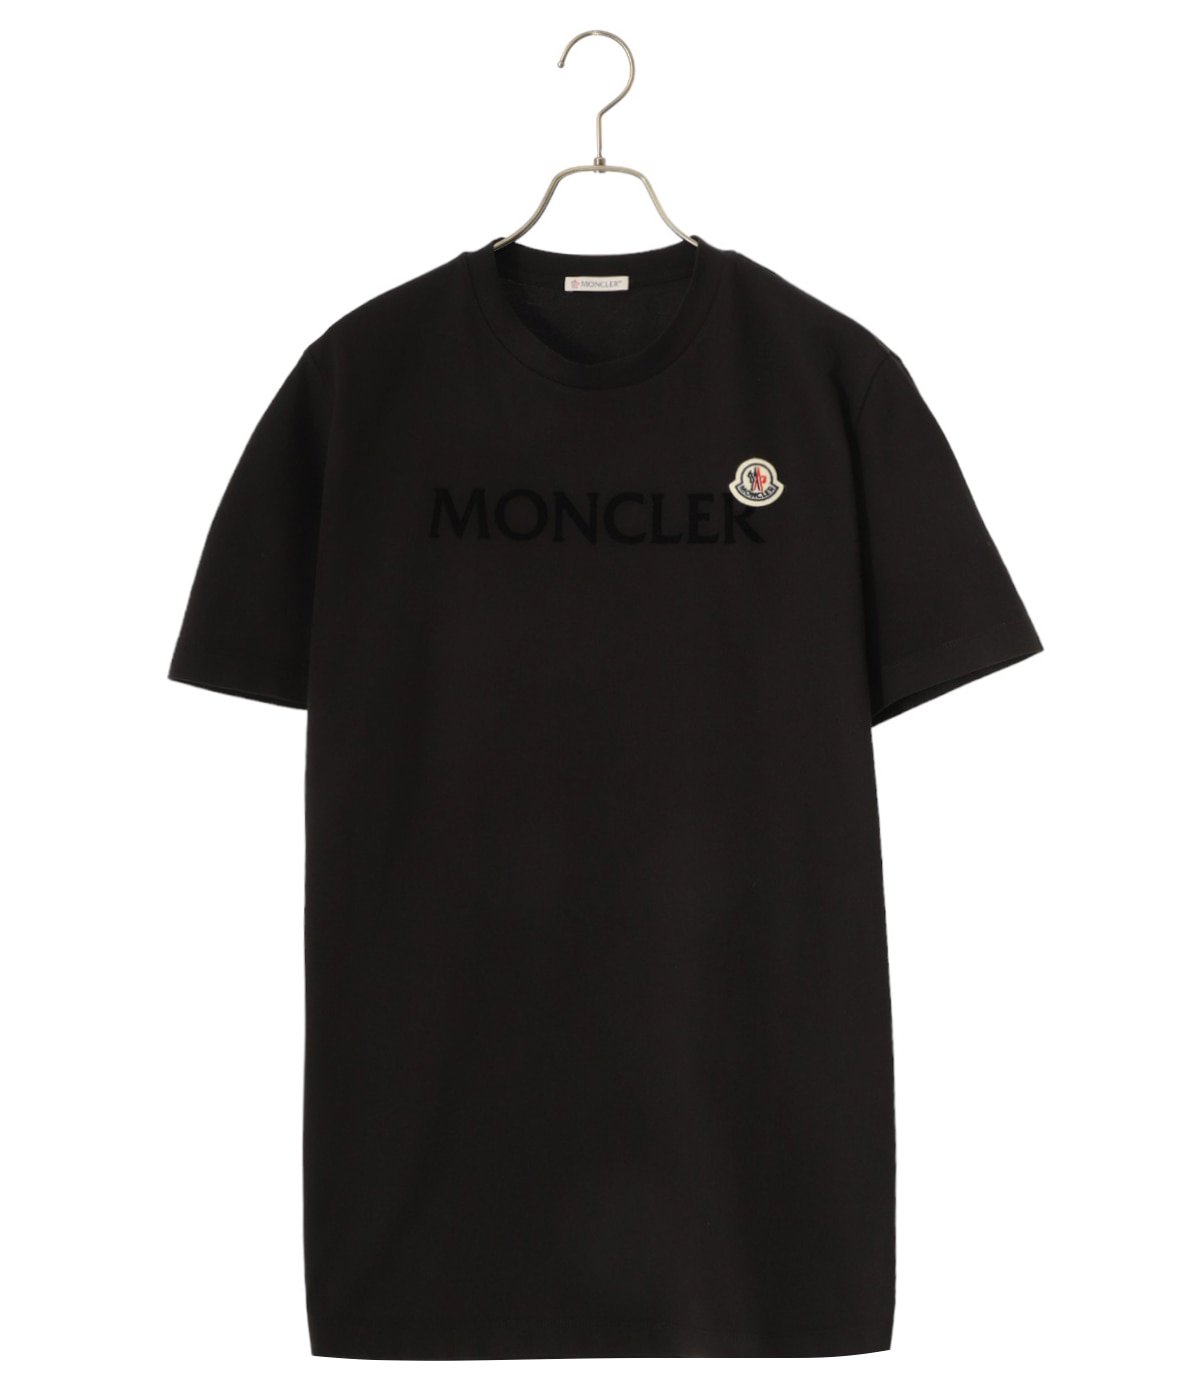 MONCLER MAGLIA T-SHIRT モンクレール マグリアTシャツ - Tシャツ ...